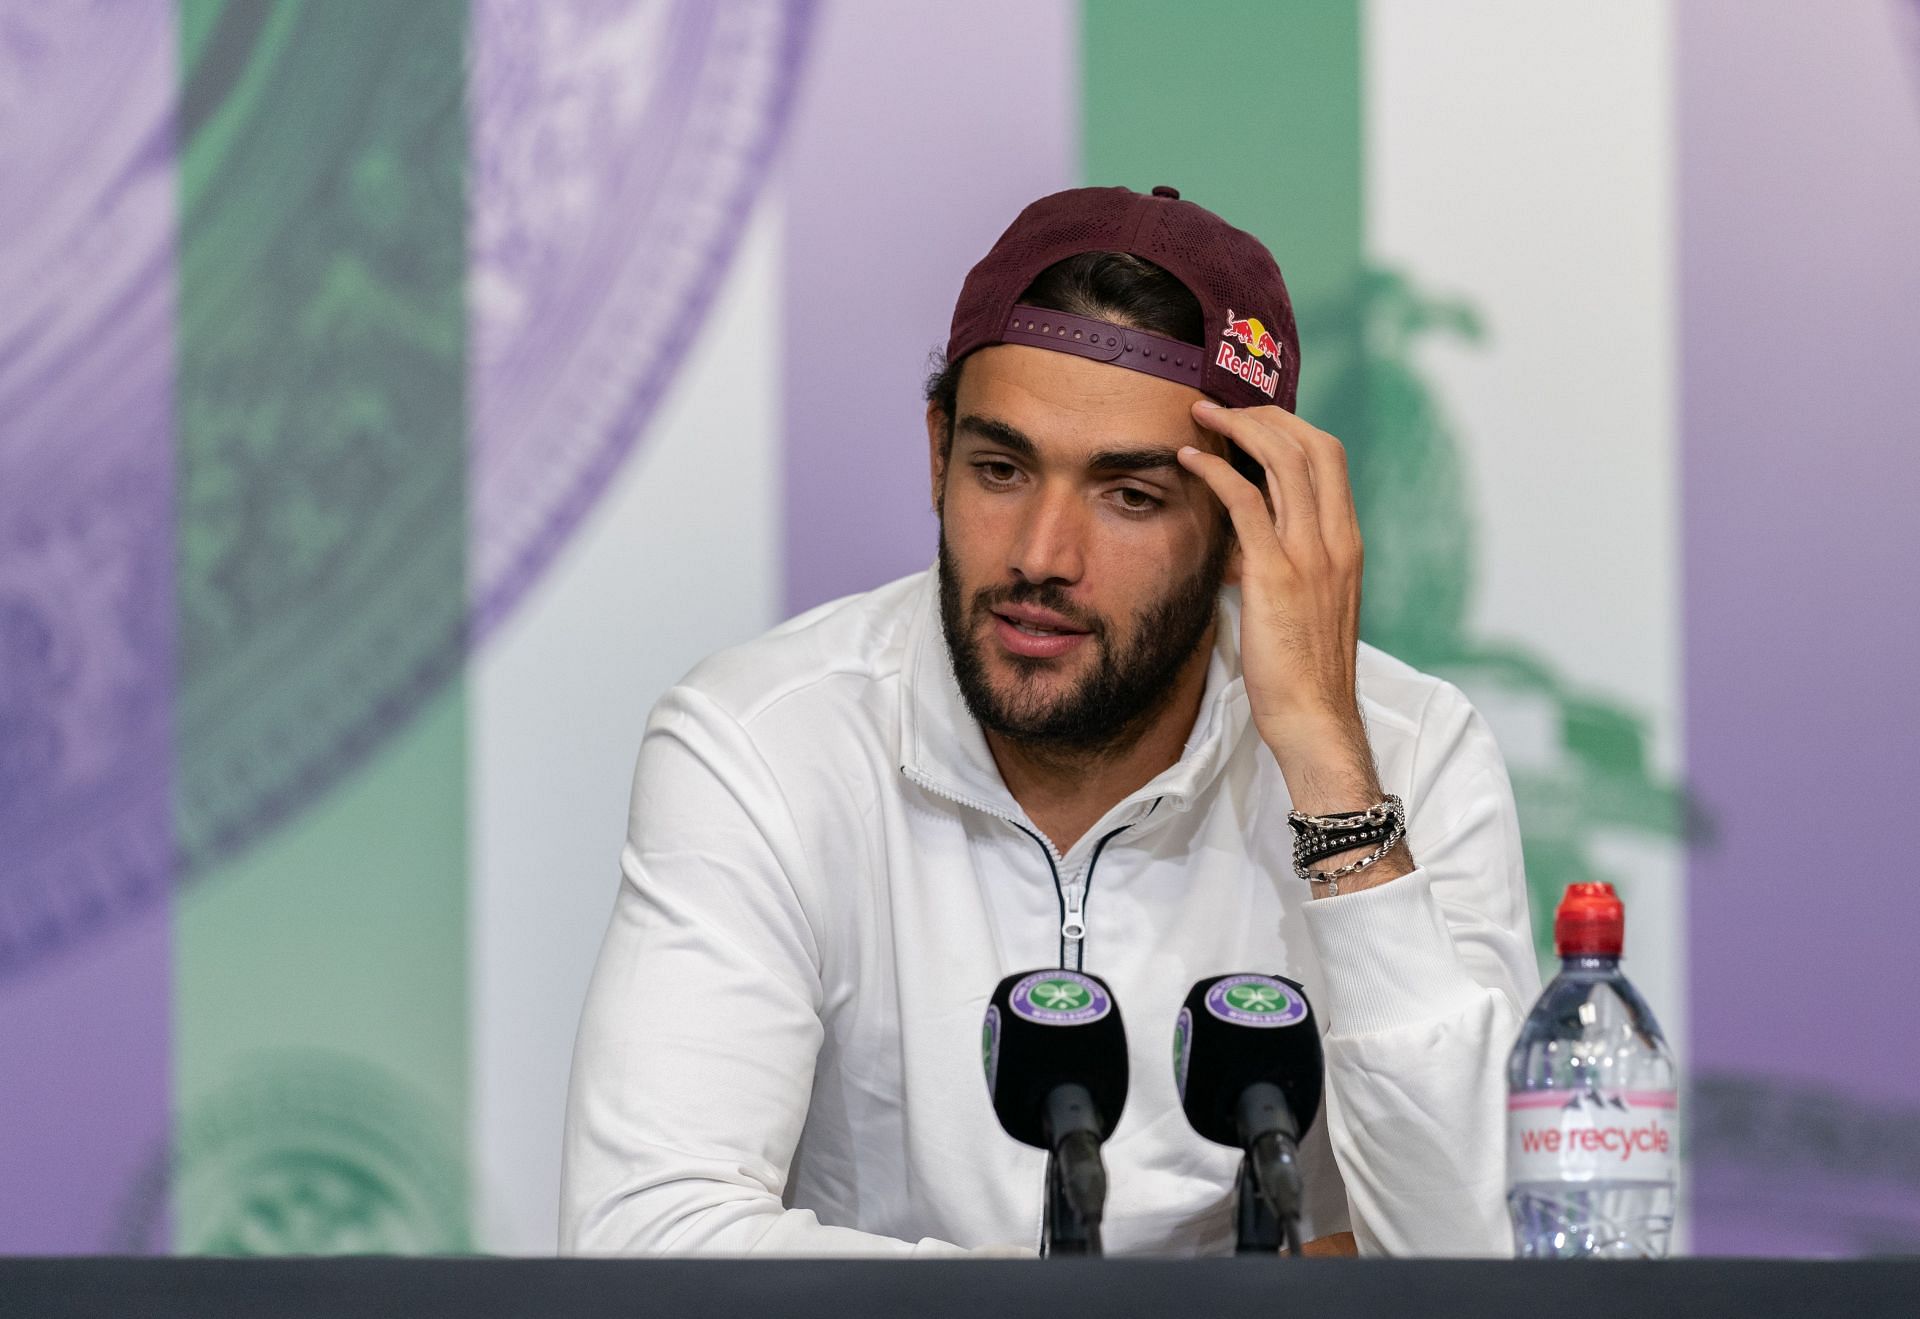 Matteo Berrettini at the 2021 Wimbledon previews